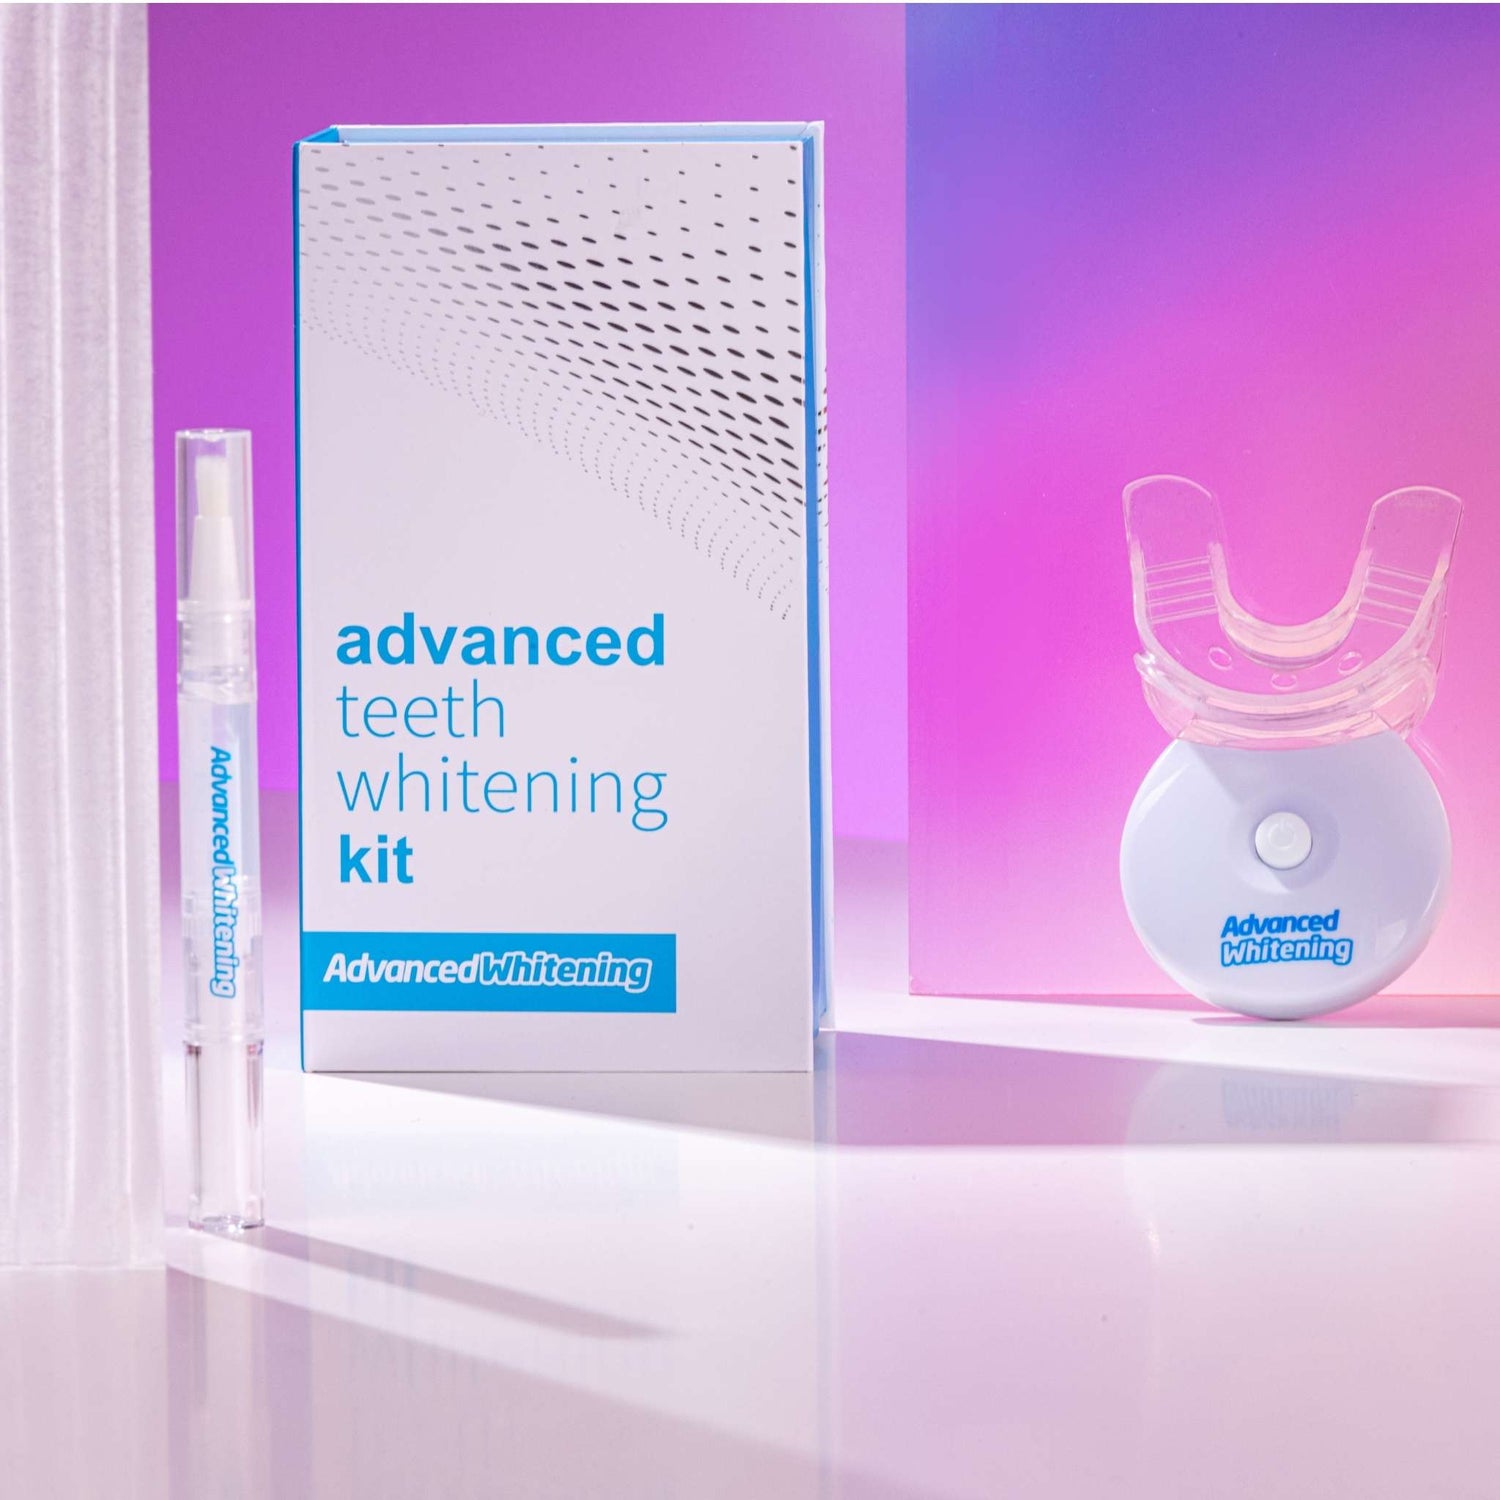 Meet the Advanced Teeth Whitening Kit